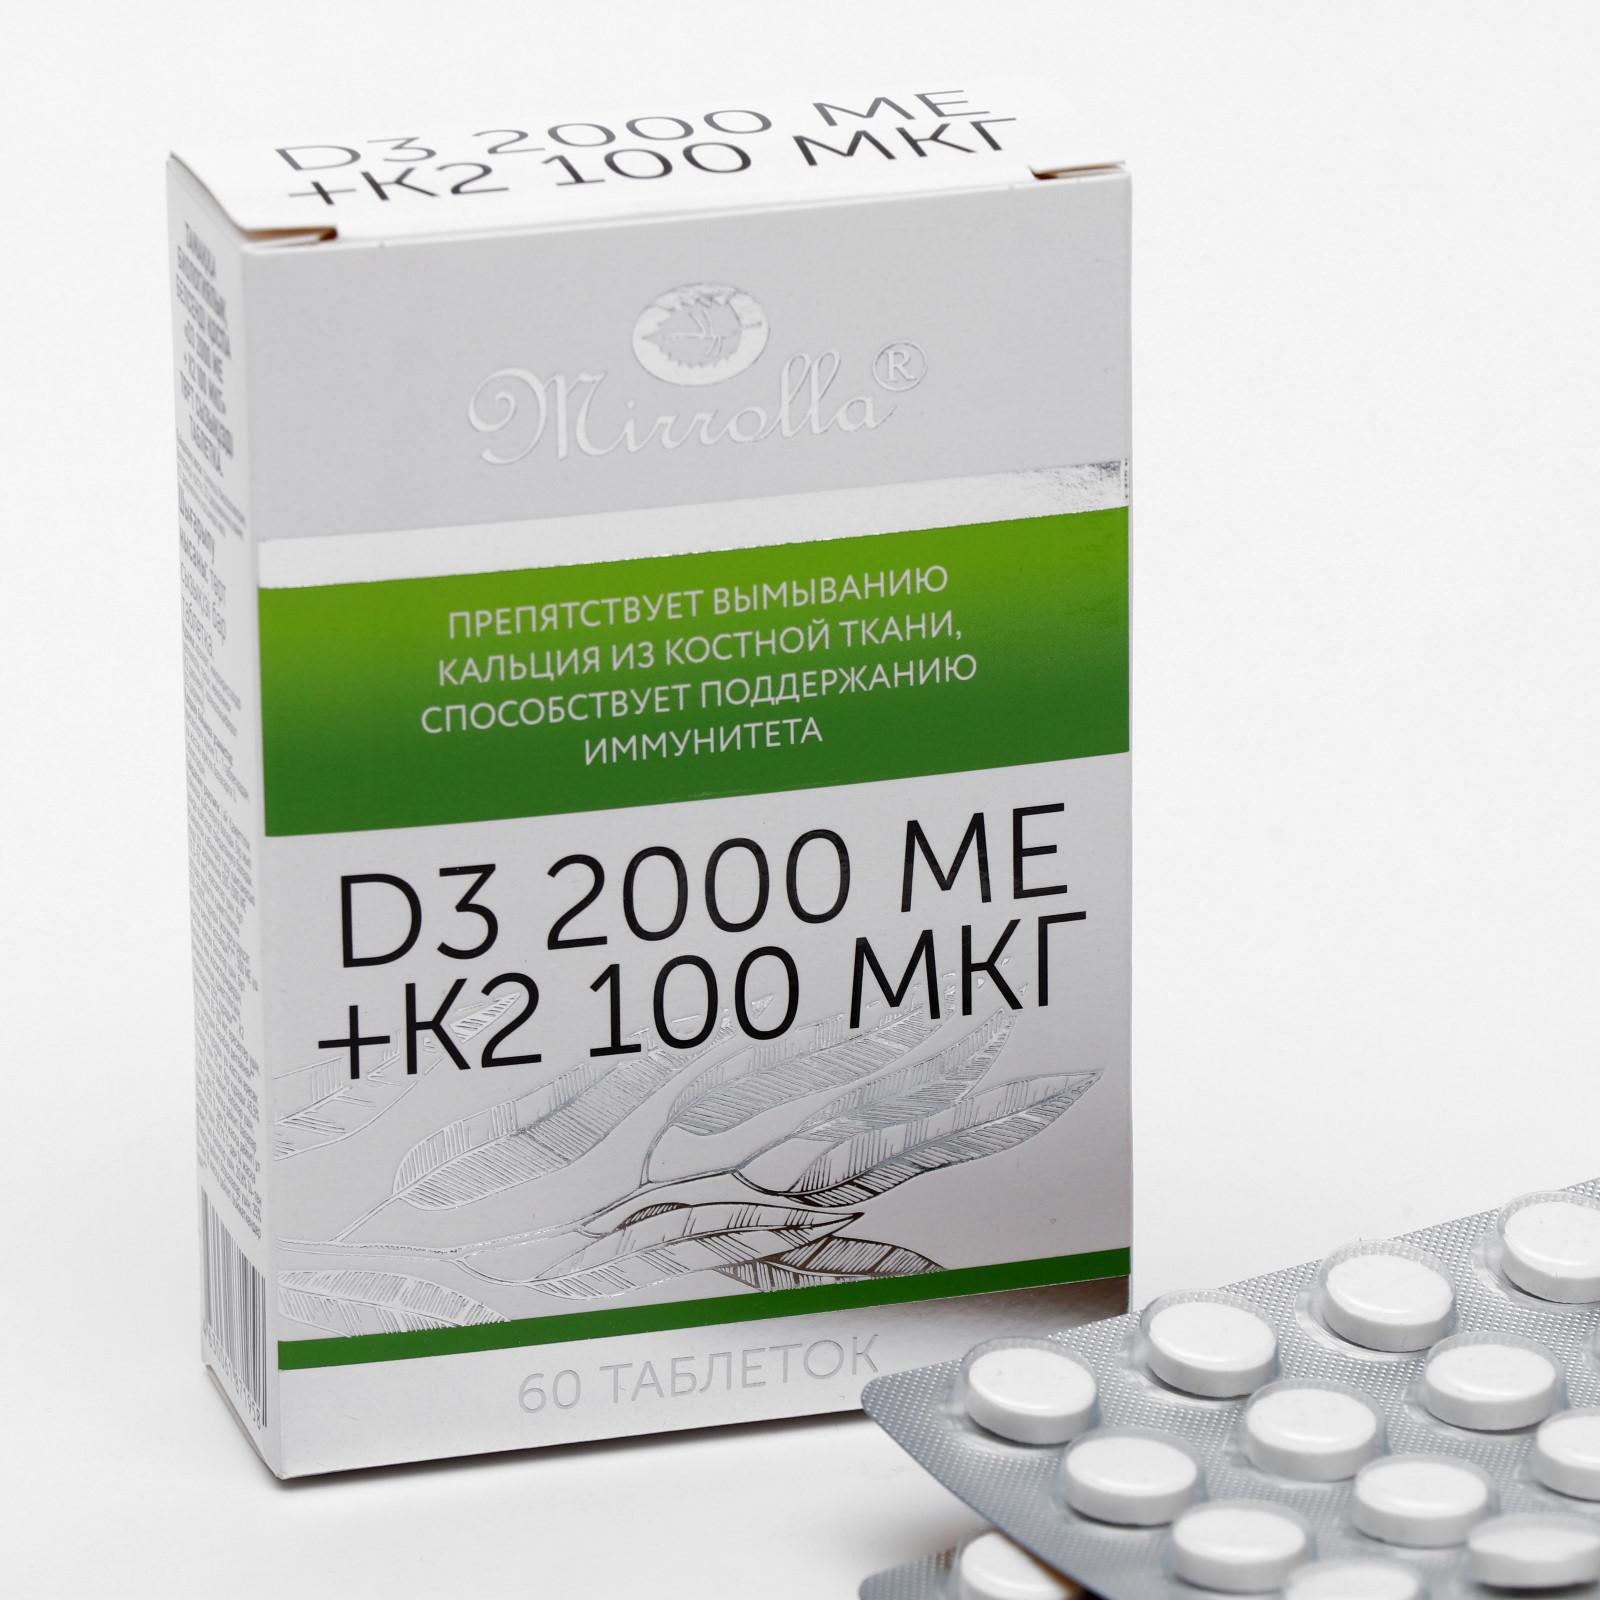 Как принимать д3 2000. Витамин d3 Mirrolla 2000 me + k2 100 мкг таблетки. Витамин d3 2000me + k2 100 мкг. Витамин д3 2000ме к2 100 мкг.